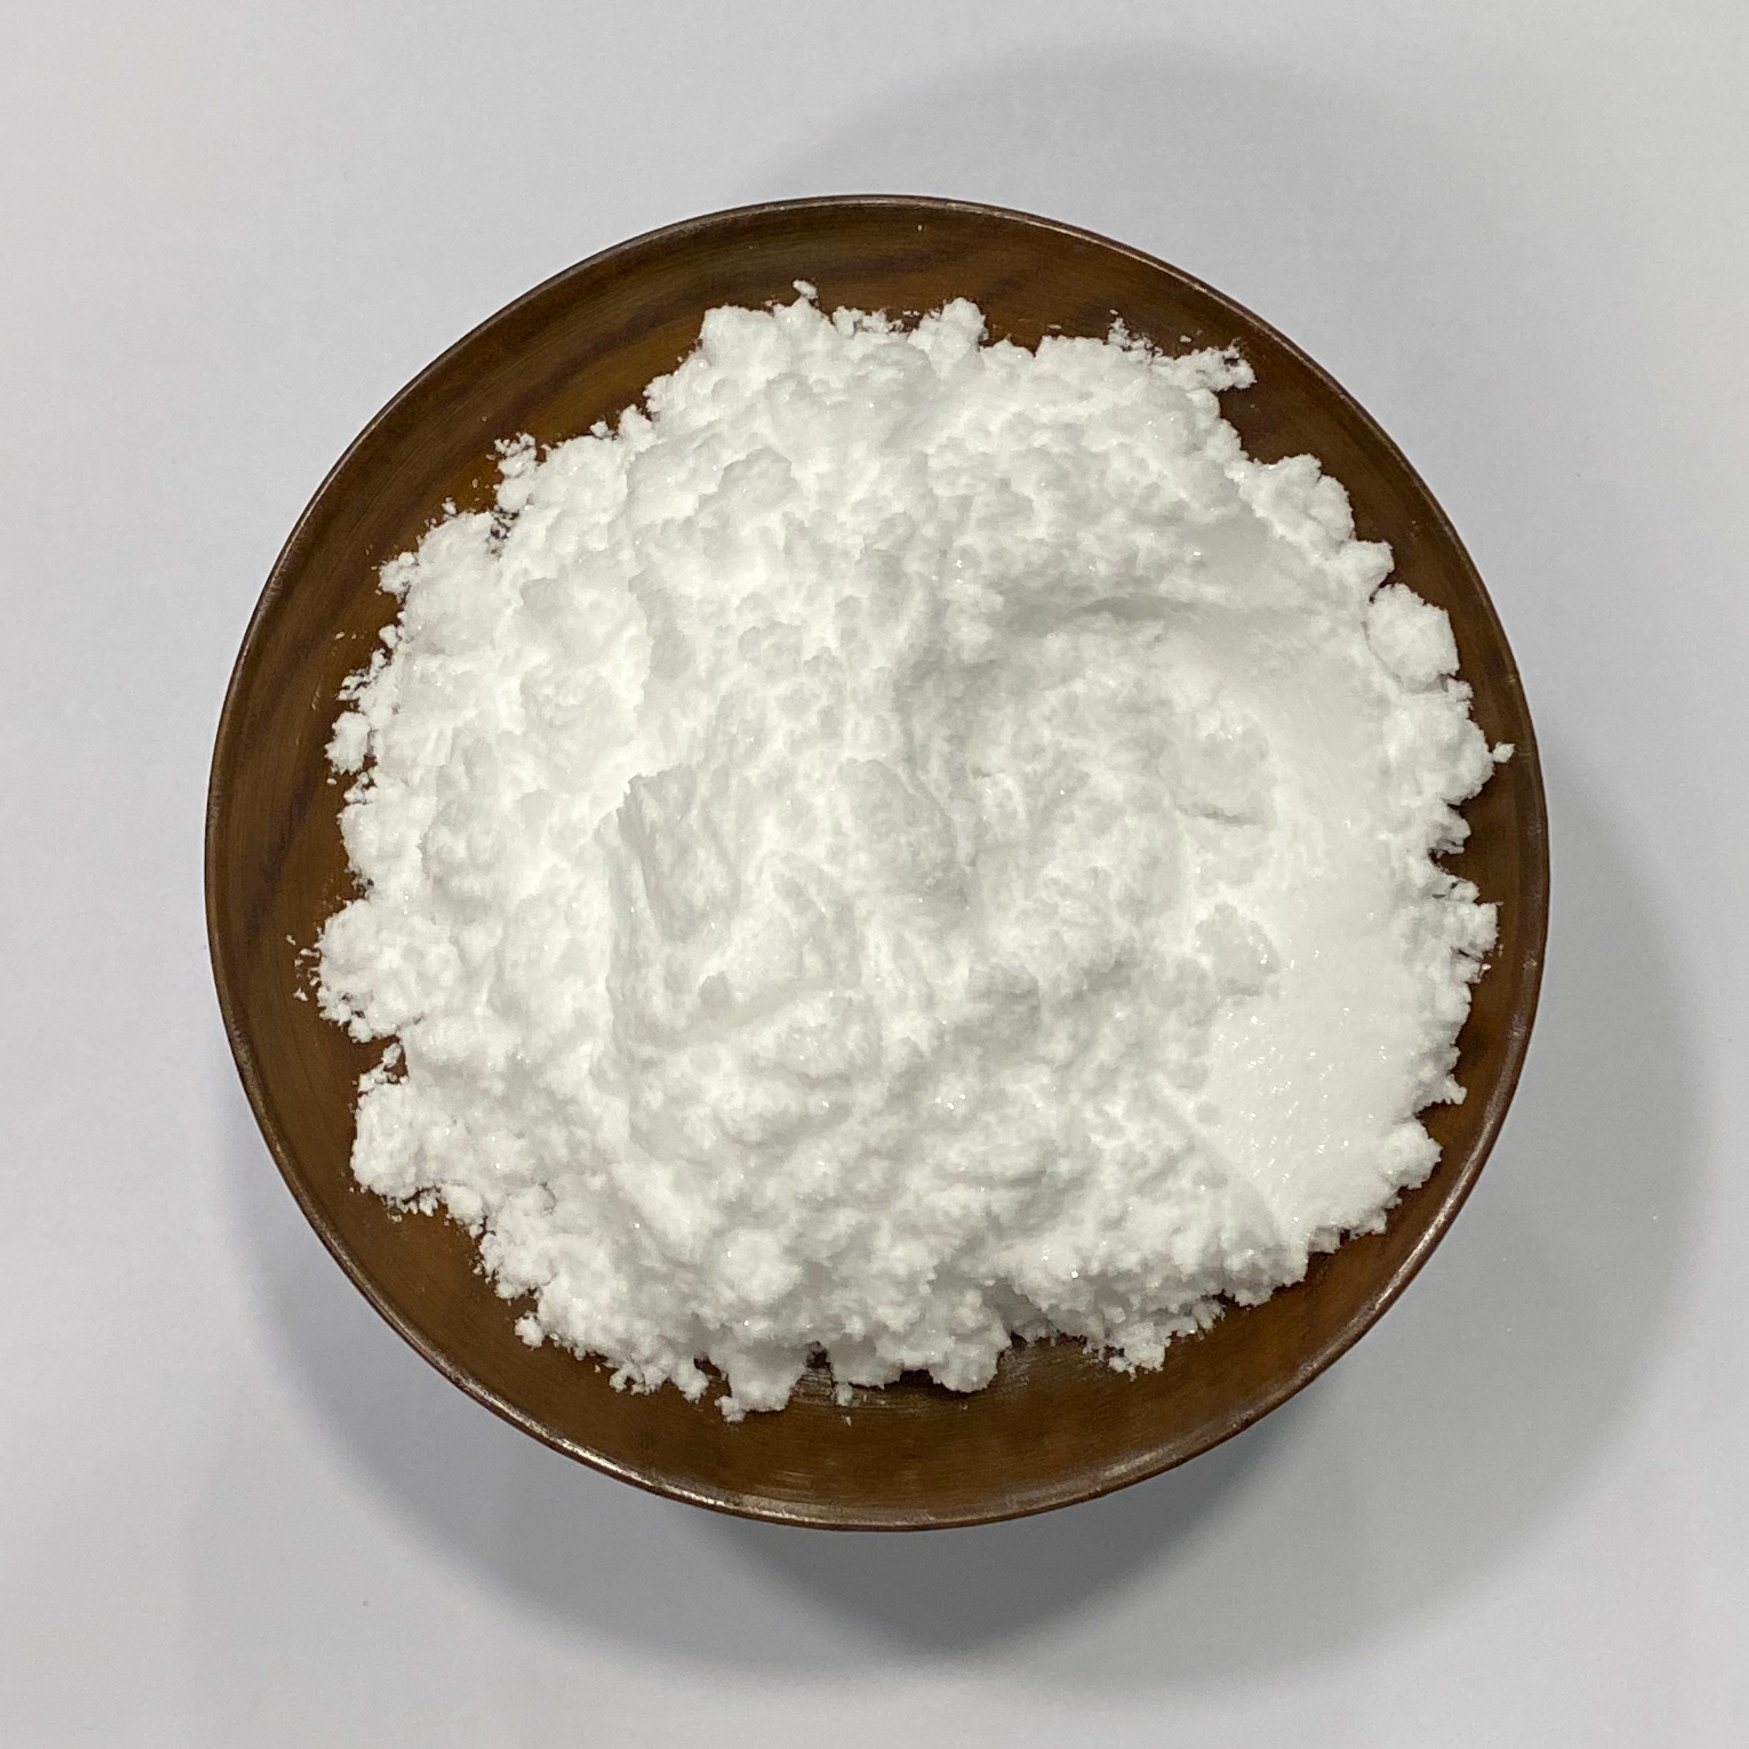 Tadalafil powder is a sex enhancing   hormone